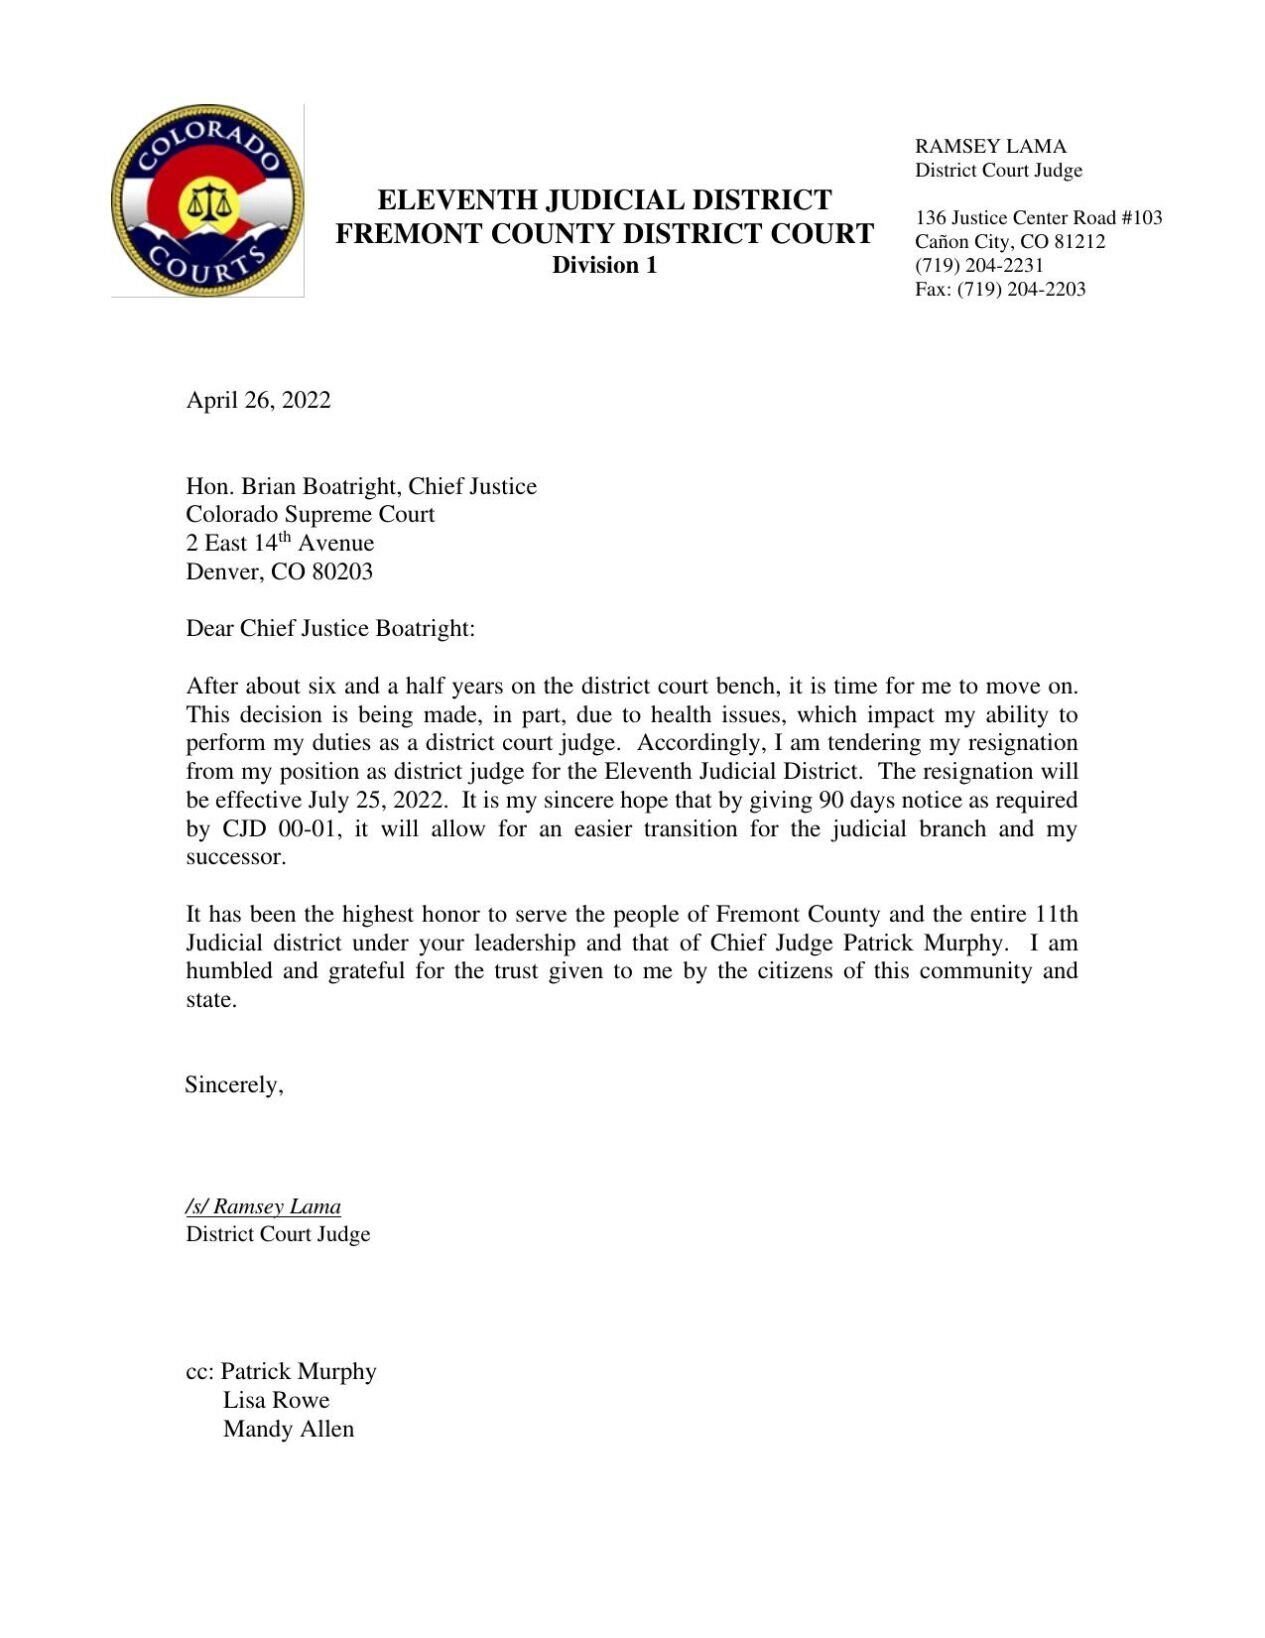 Judge Ramsey Lama Resignation Letter